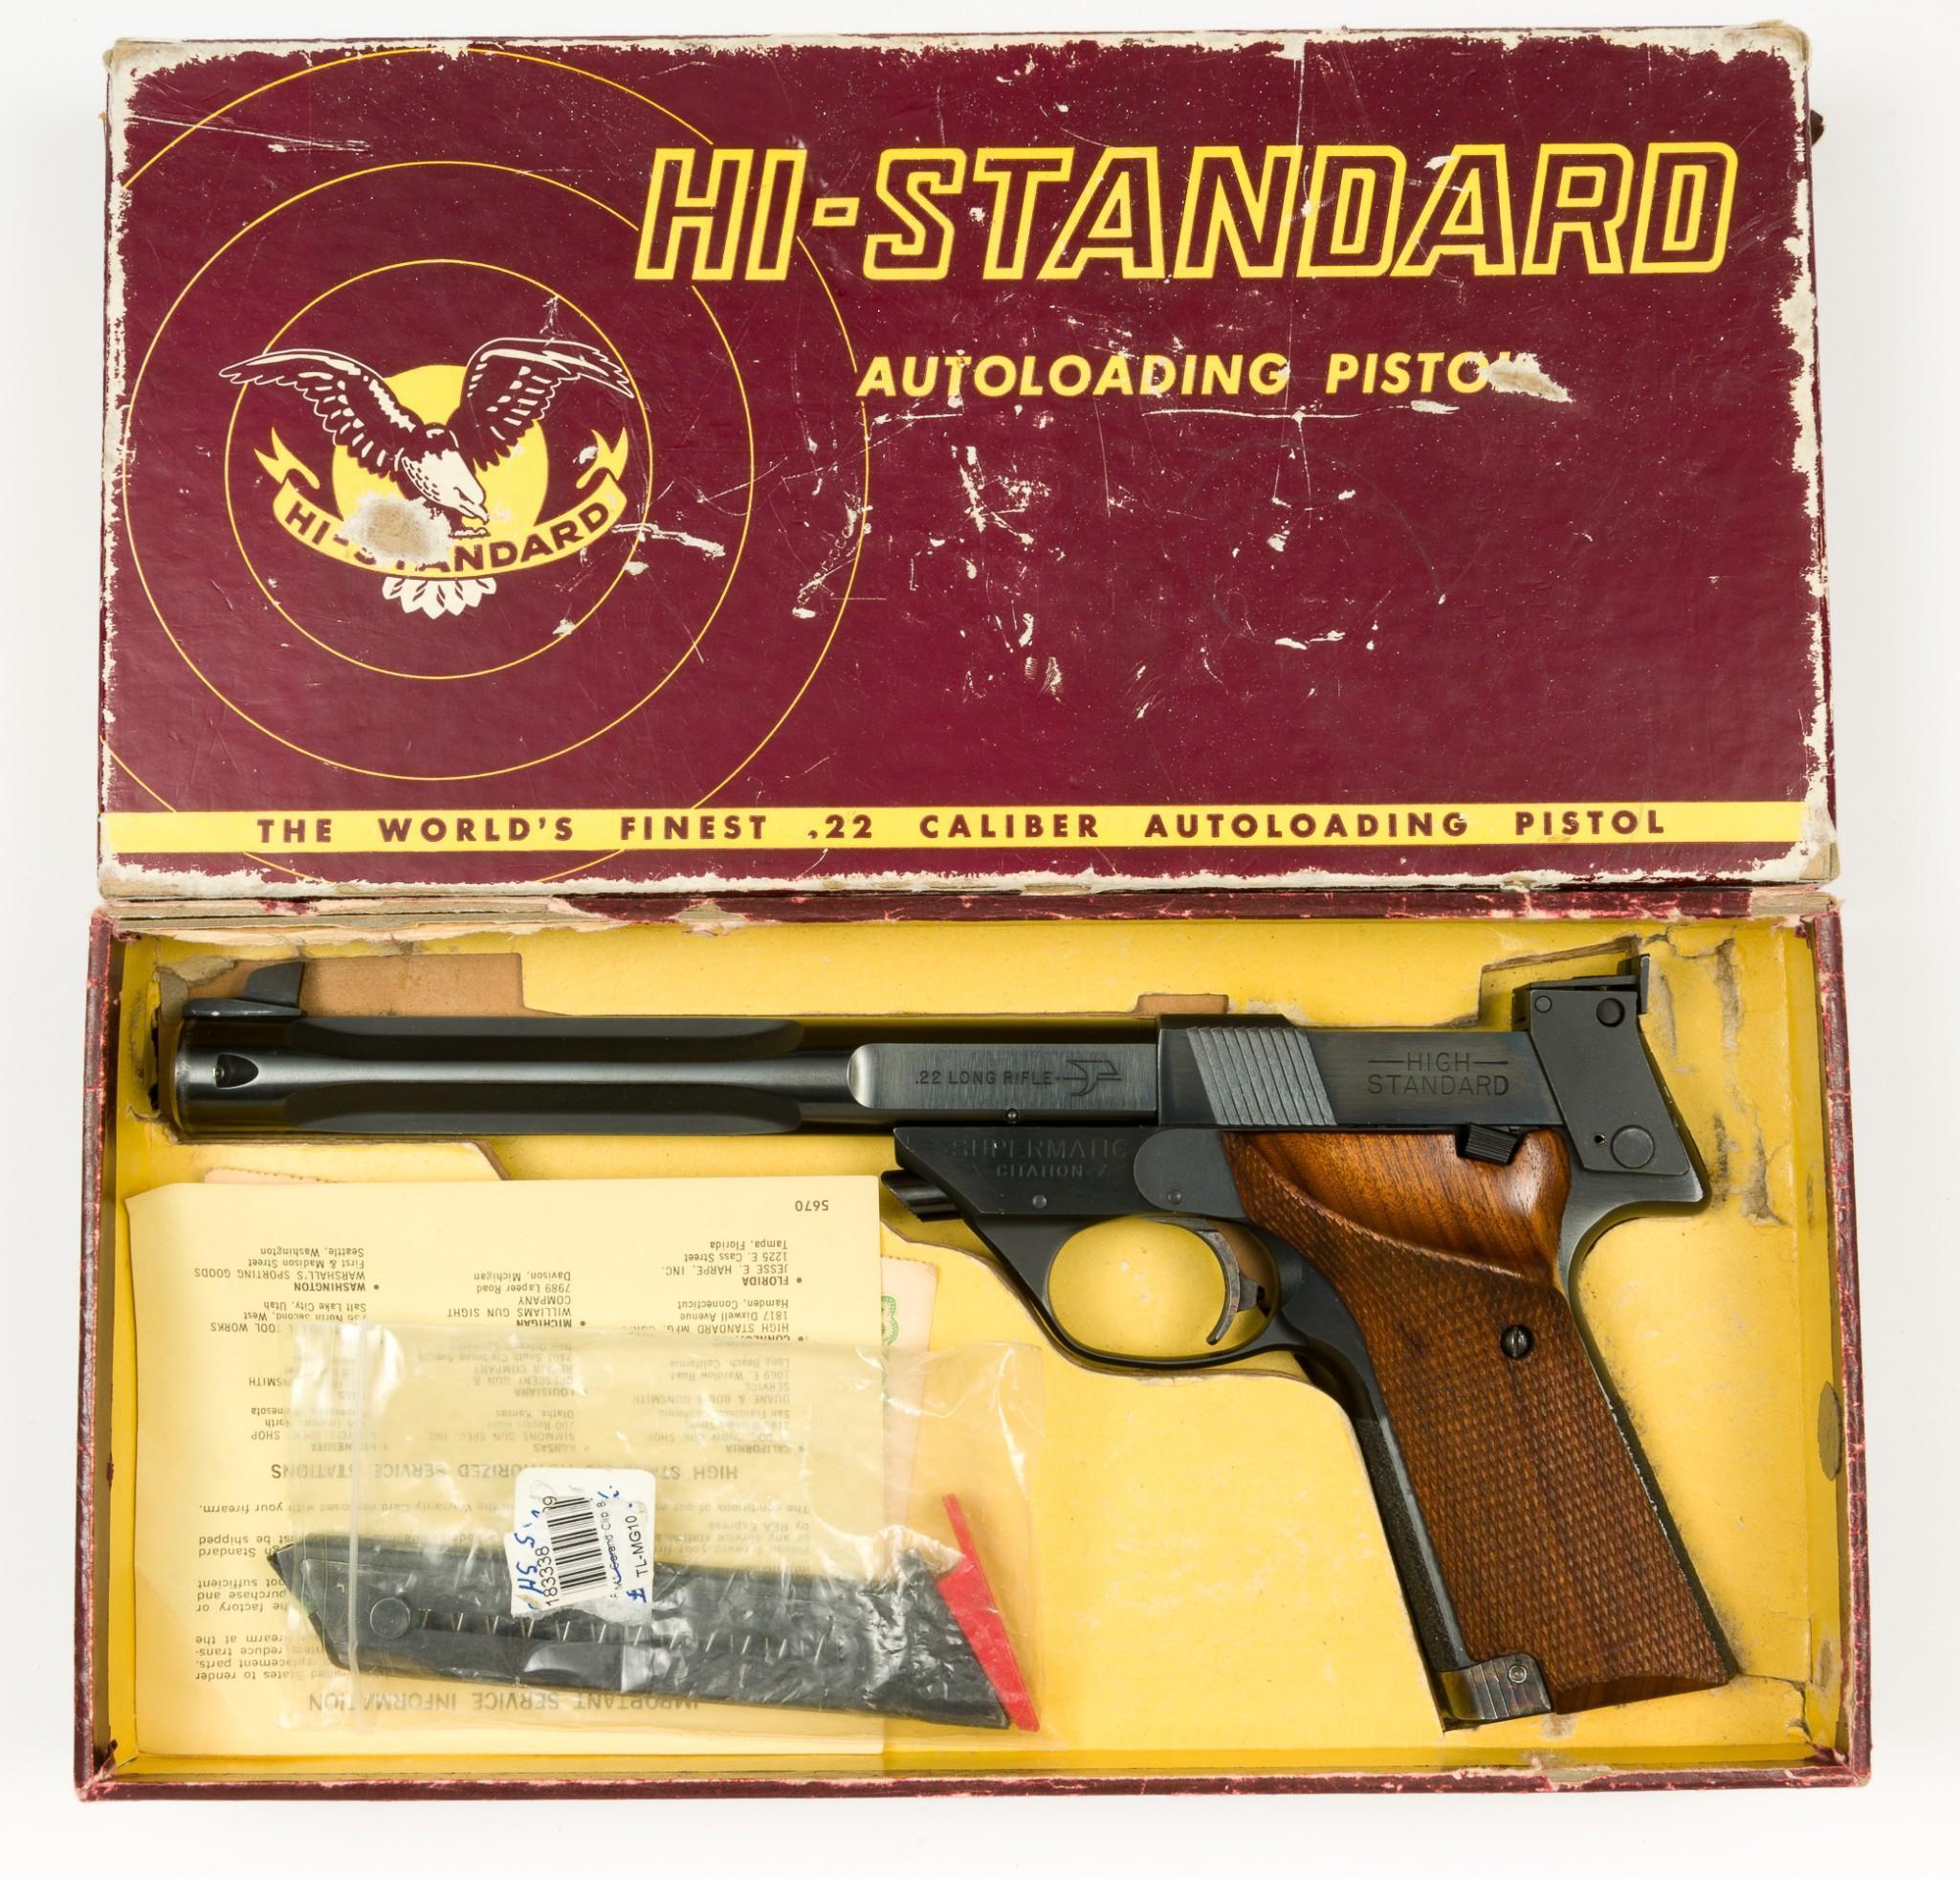 High Standard Military Model 106 Supermatic Citation .22 Pistol